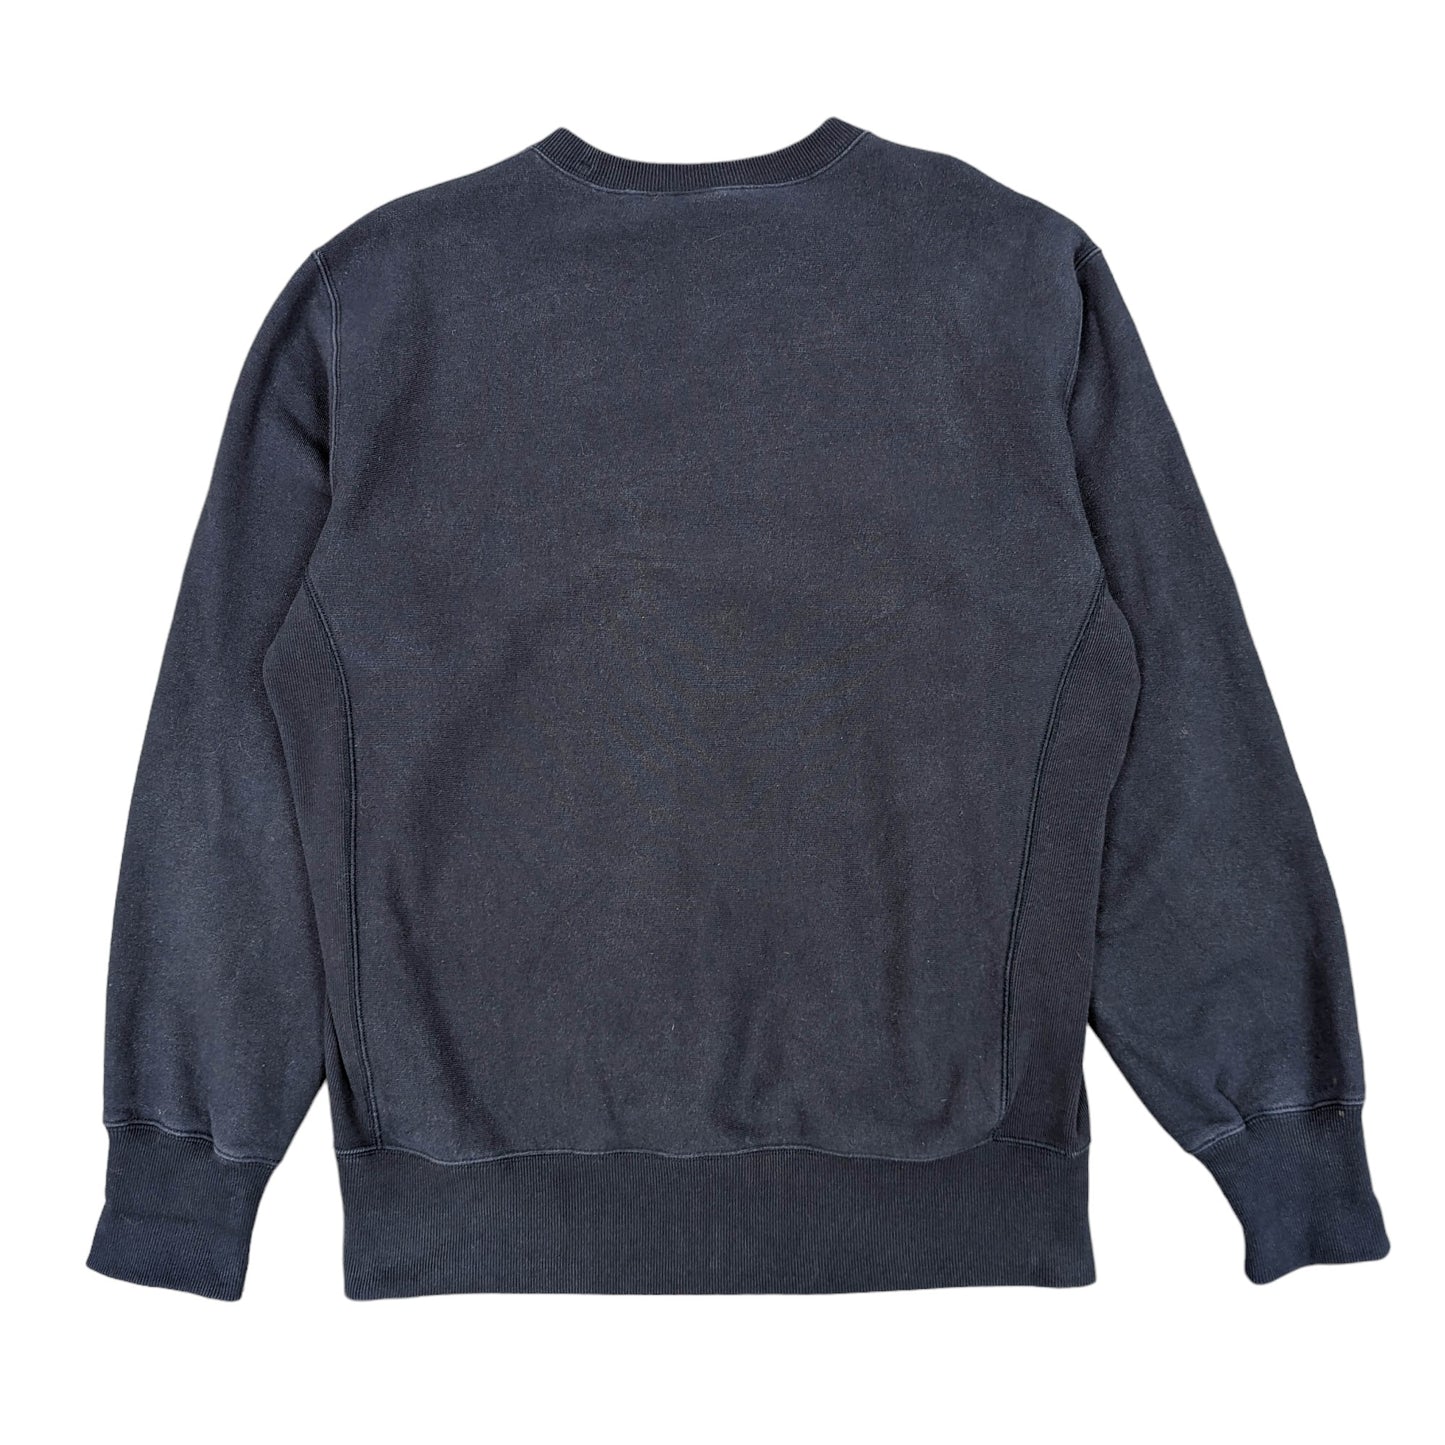 Champion Reverse Weave Sweatshirt Size XL